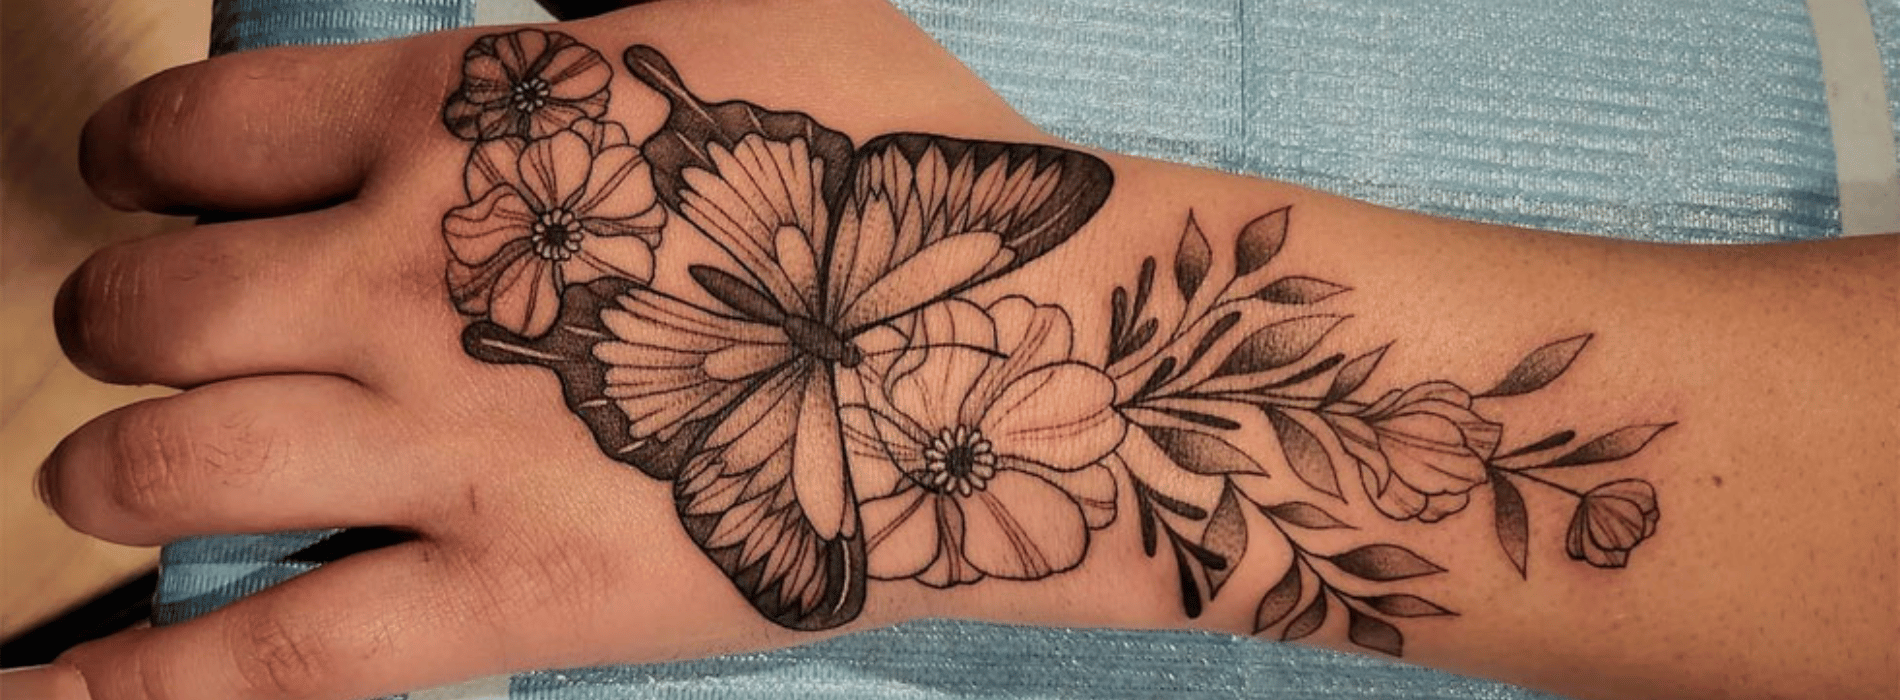 Bedeutung des Schmetterlings-Tattoos